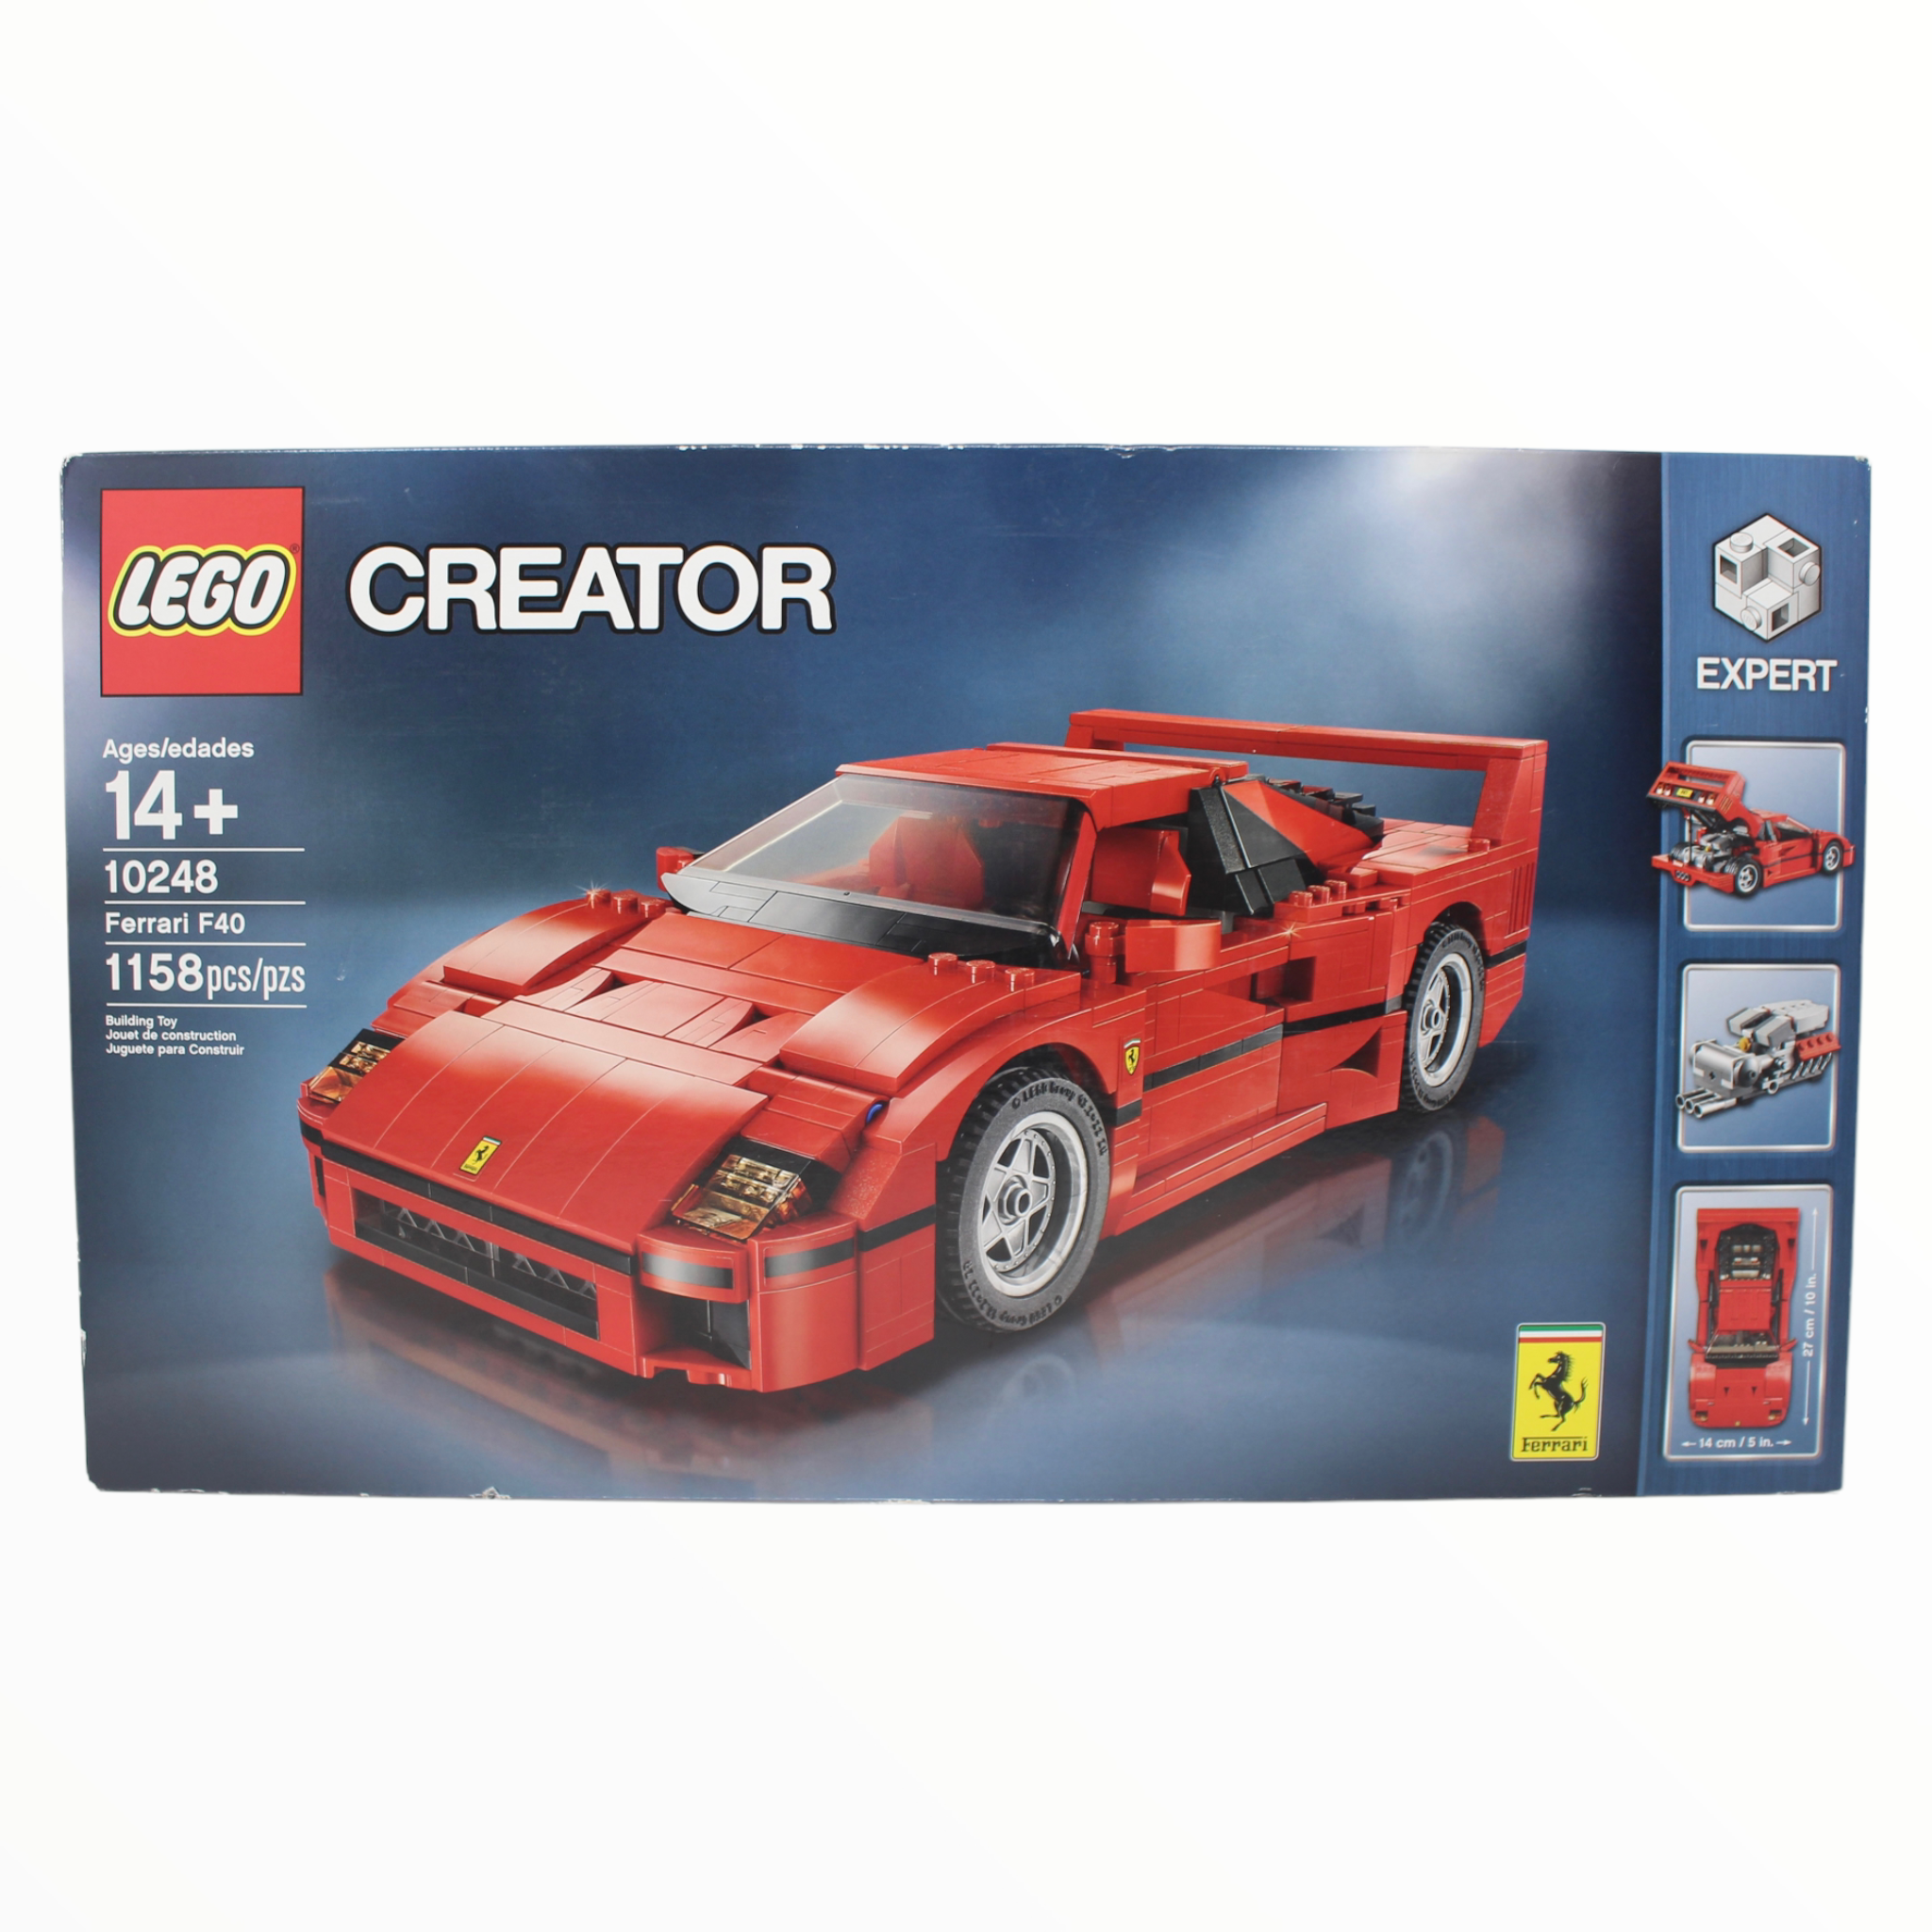 Retired Set 10248 Creator Ferrari F40 (2015)